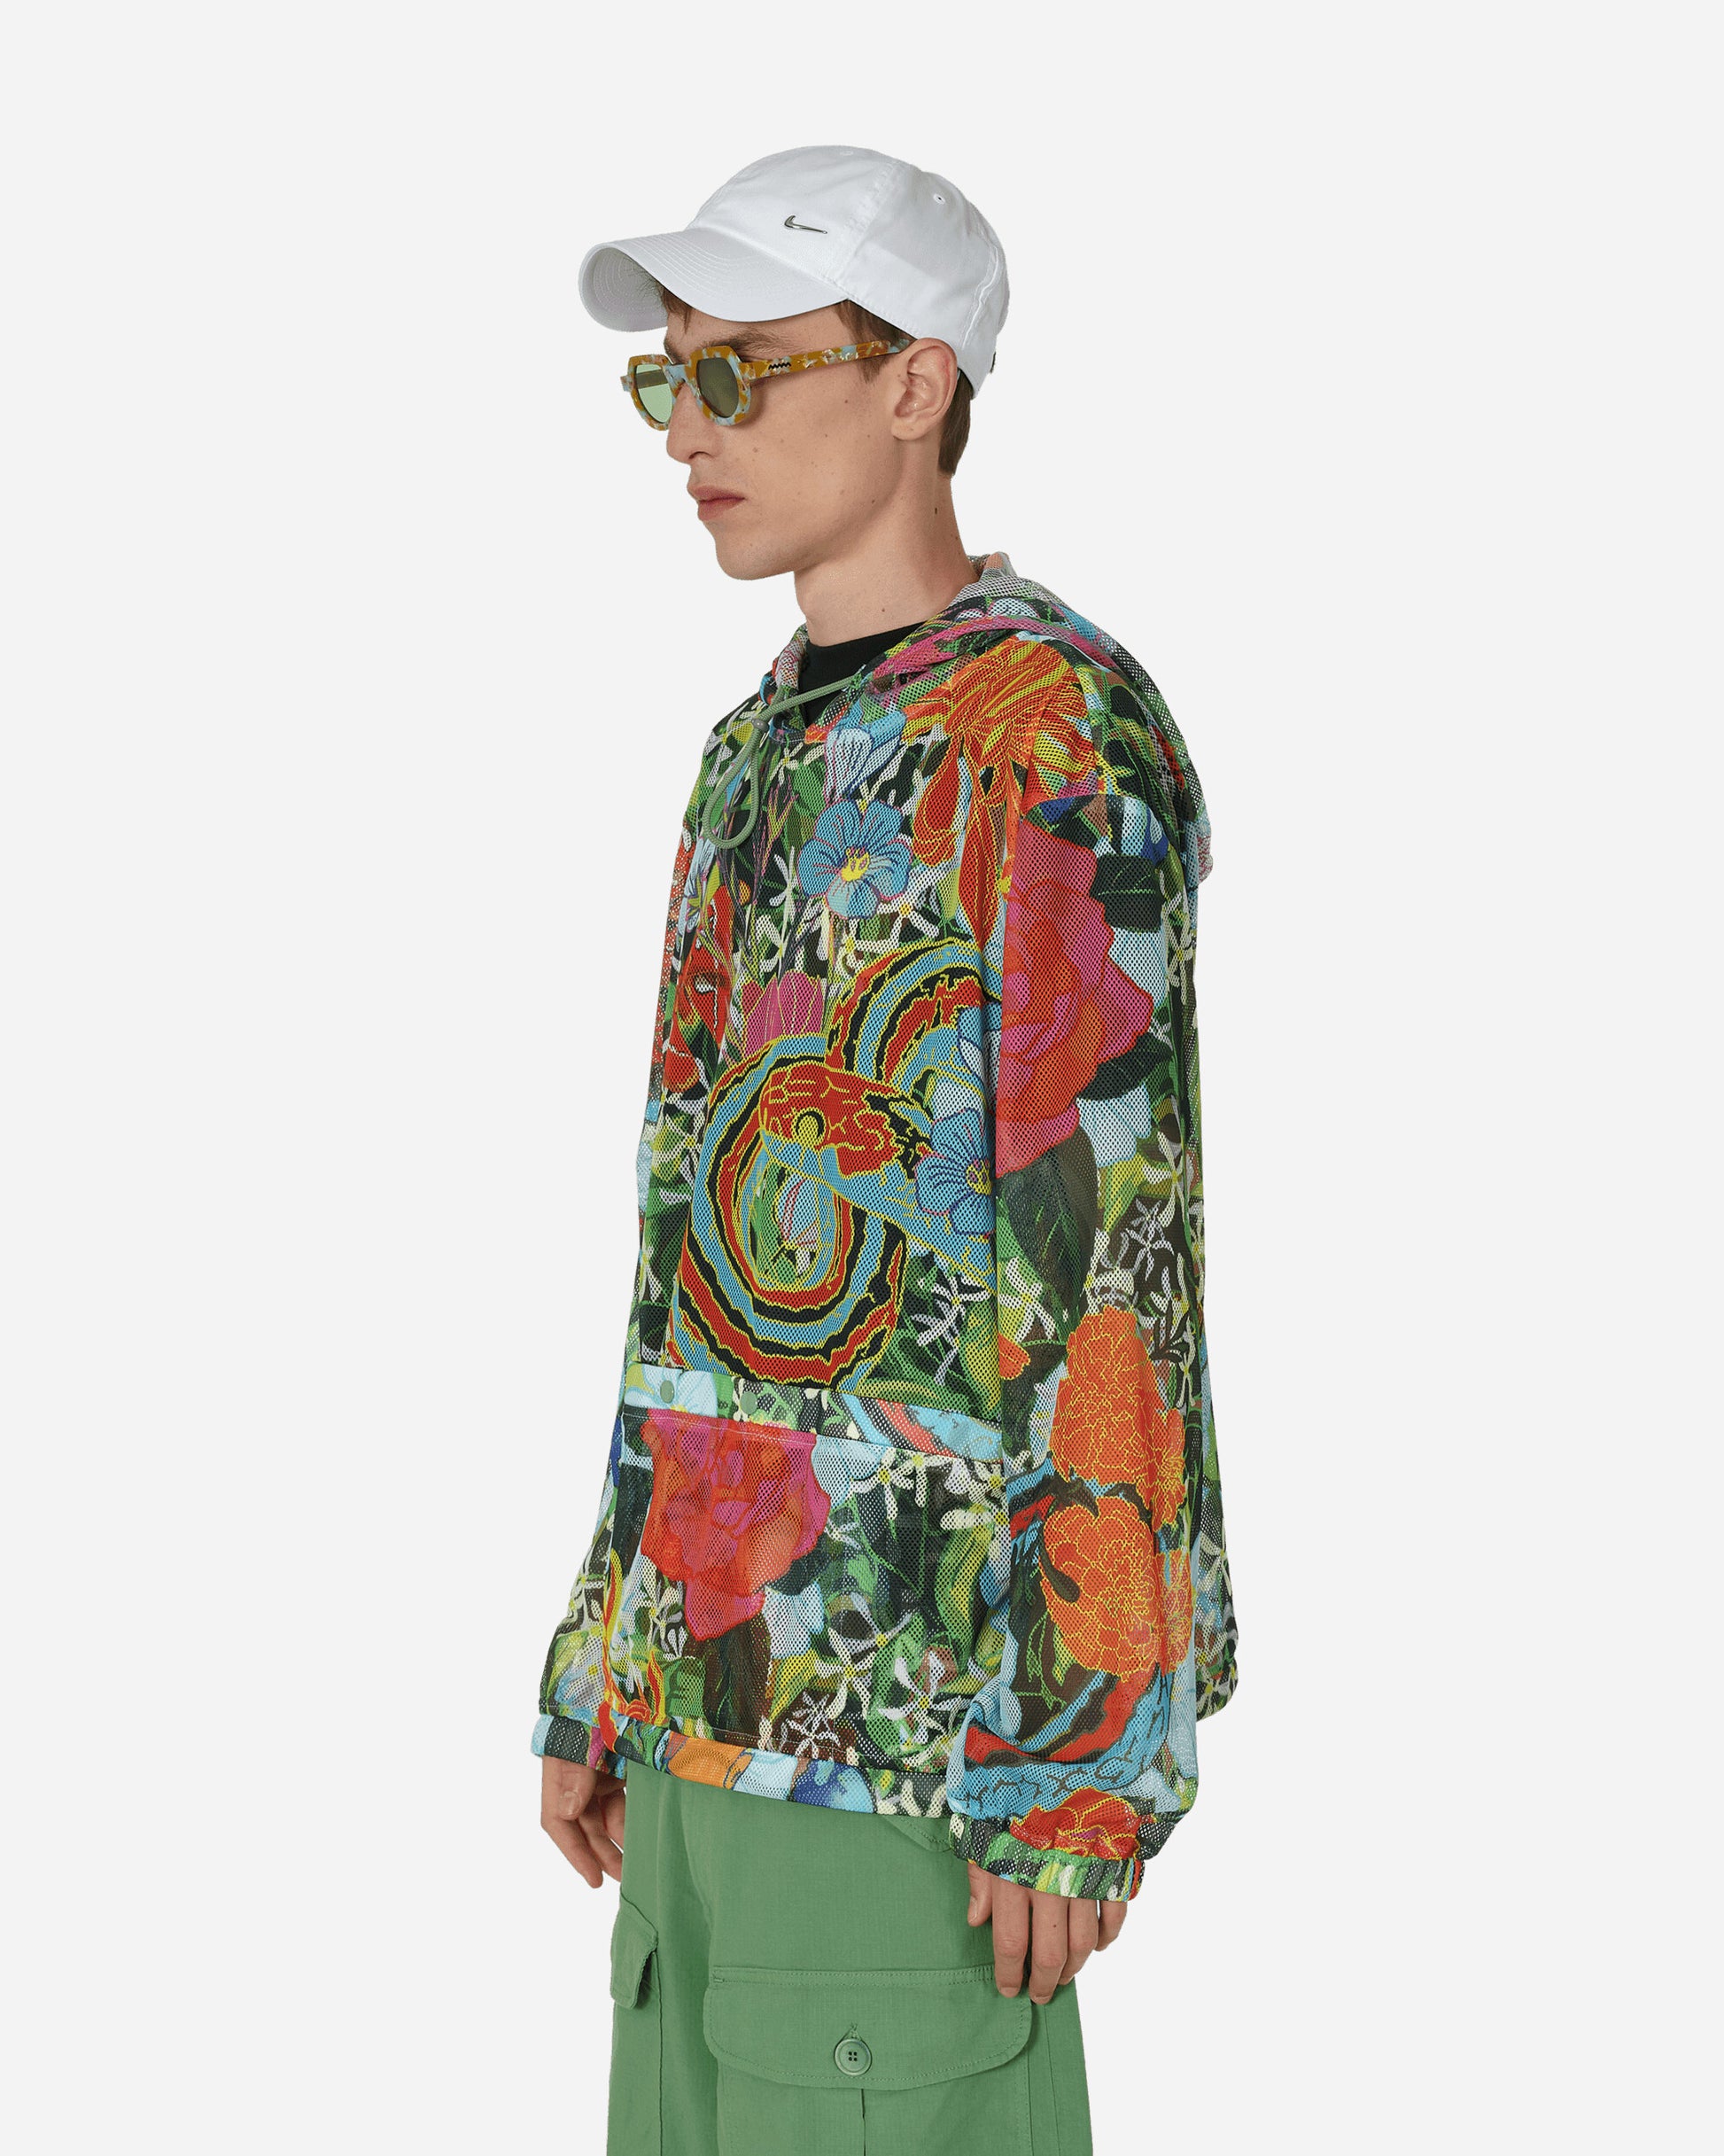 Sky High Farm Camo Print Mesh Pullover Hoodie Woven Multi Sweatshirts Hoodies SHF04J004  1